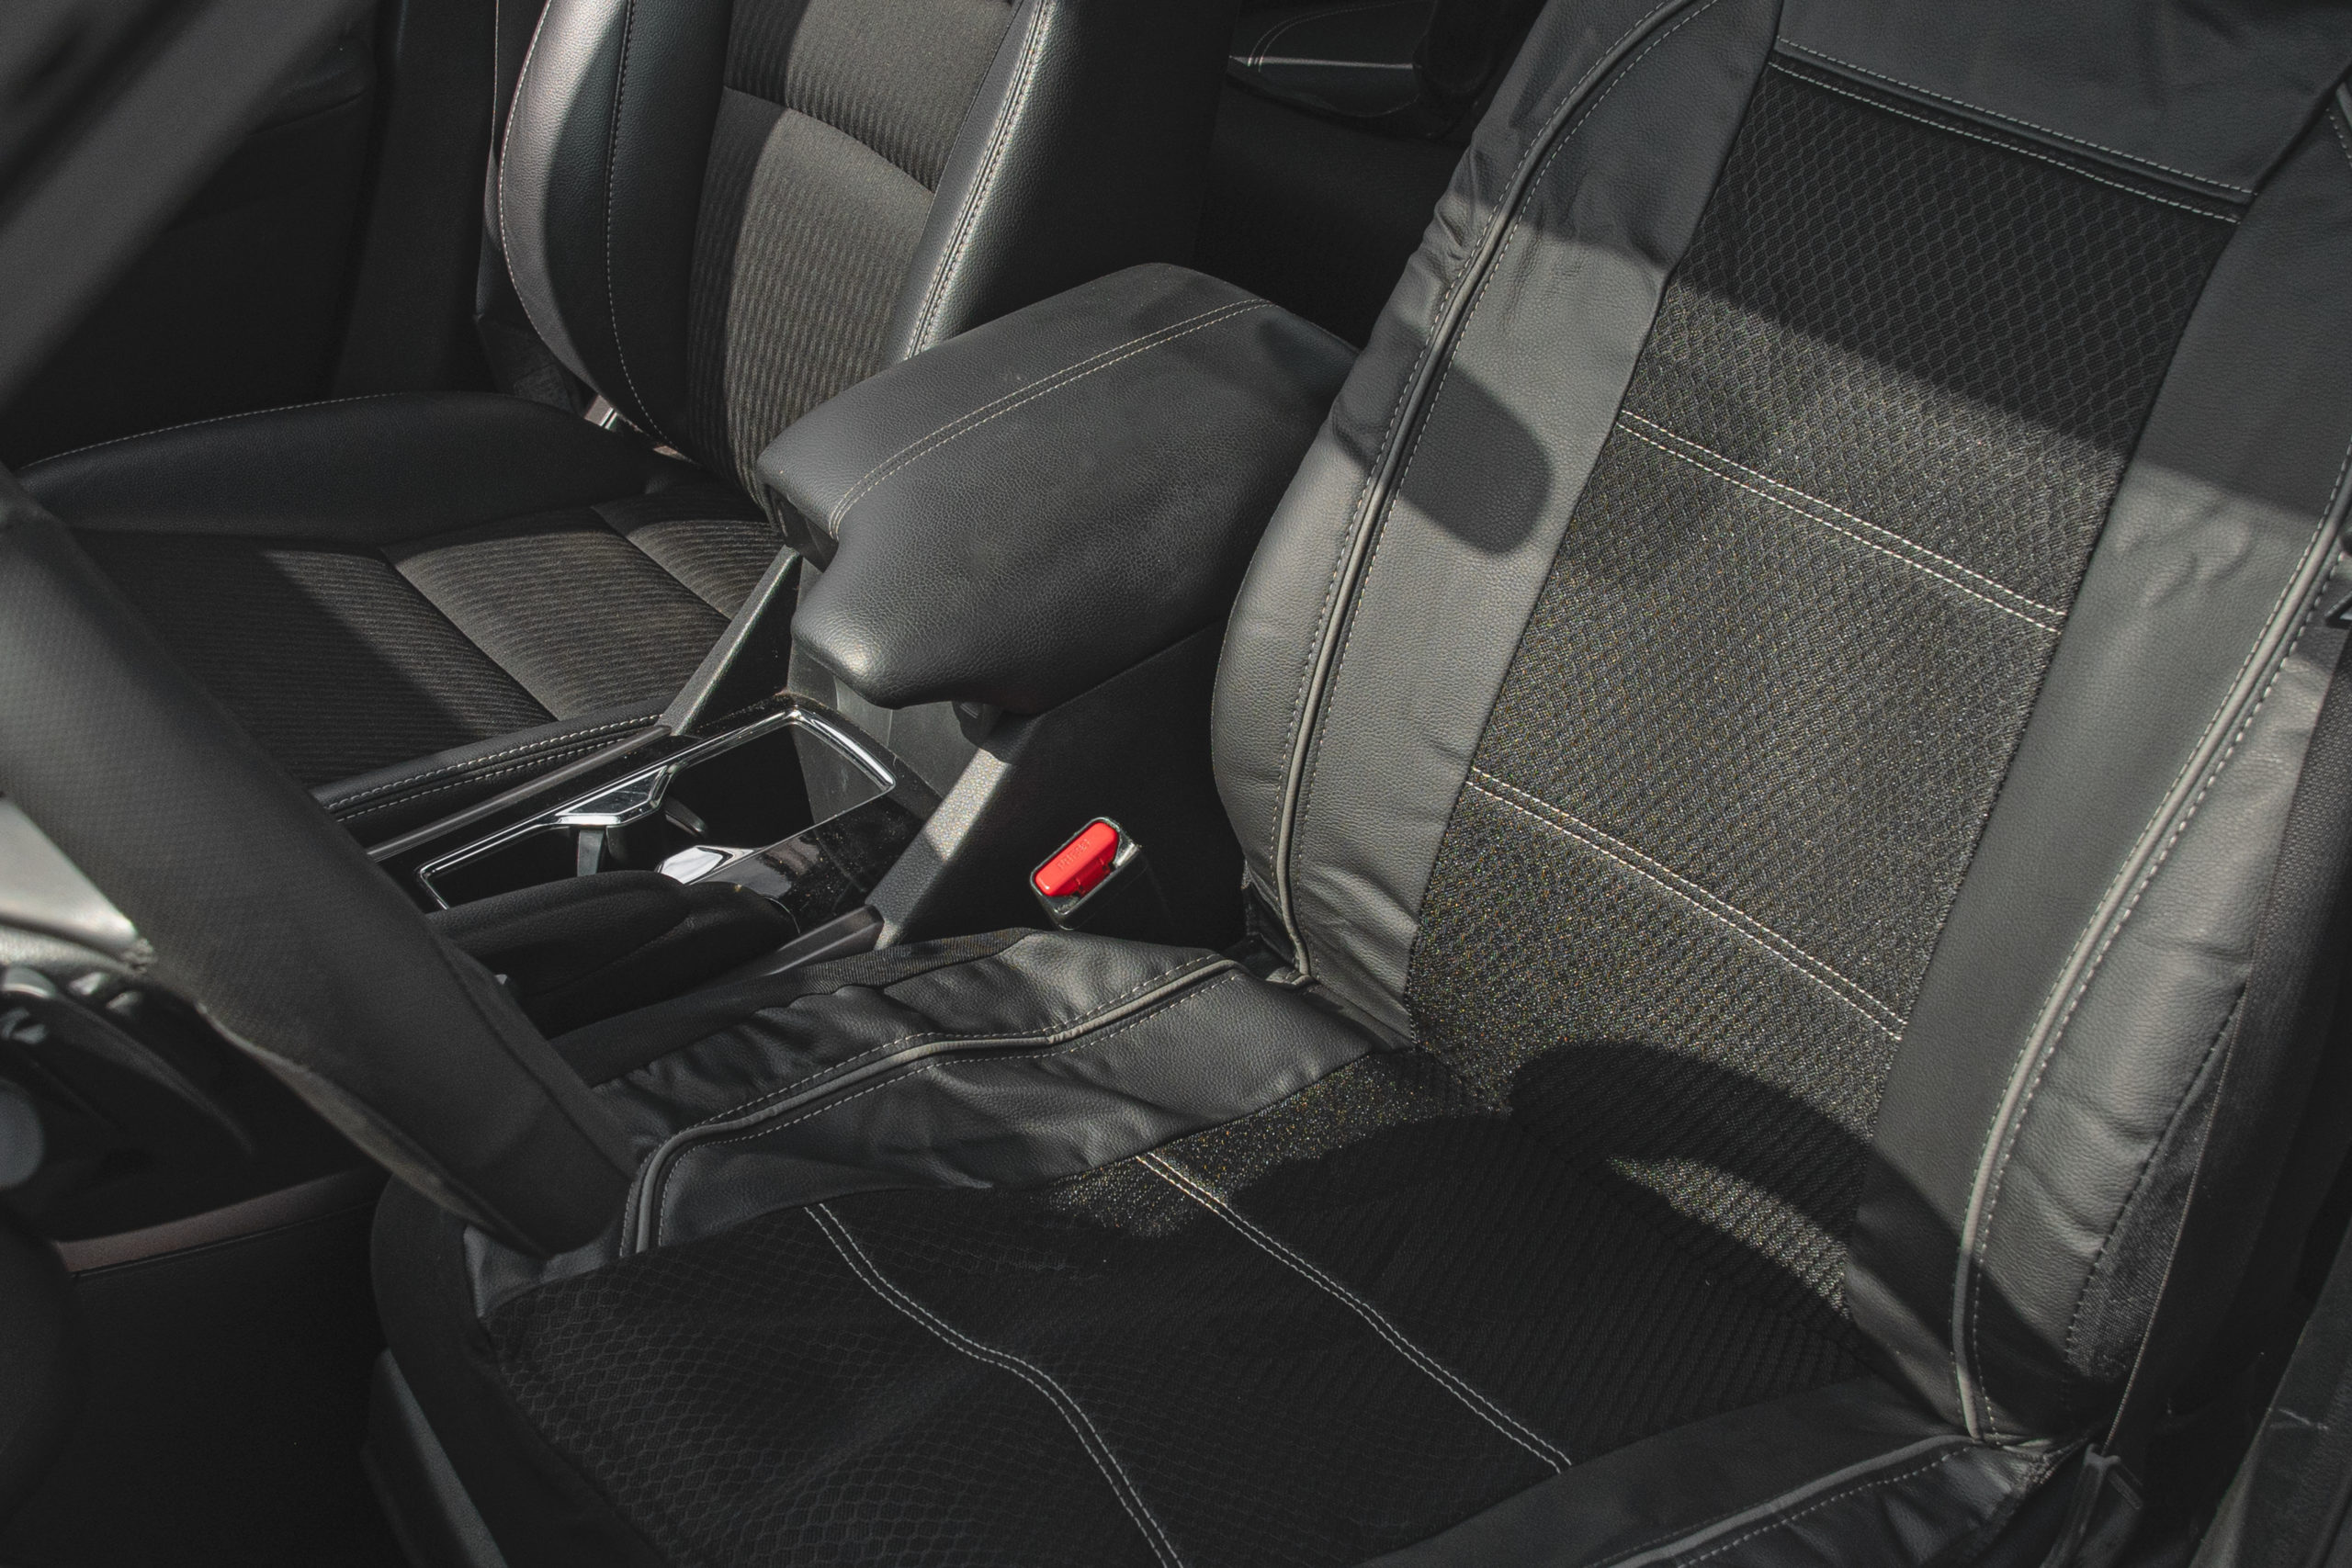 Factory Customized Luxury Design Interior Accessories Car Seat